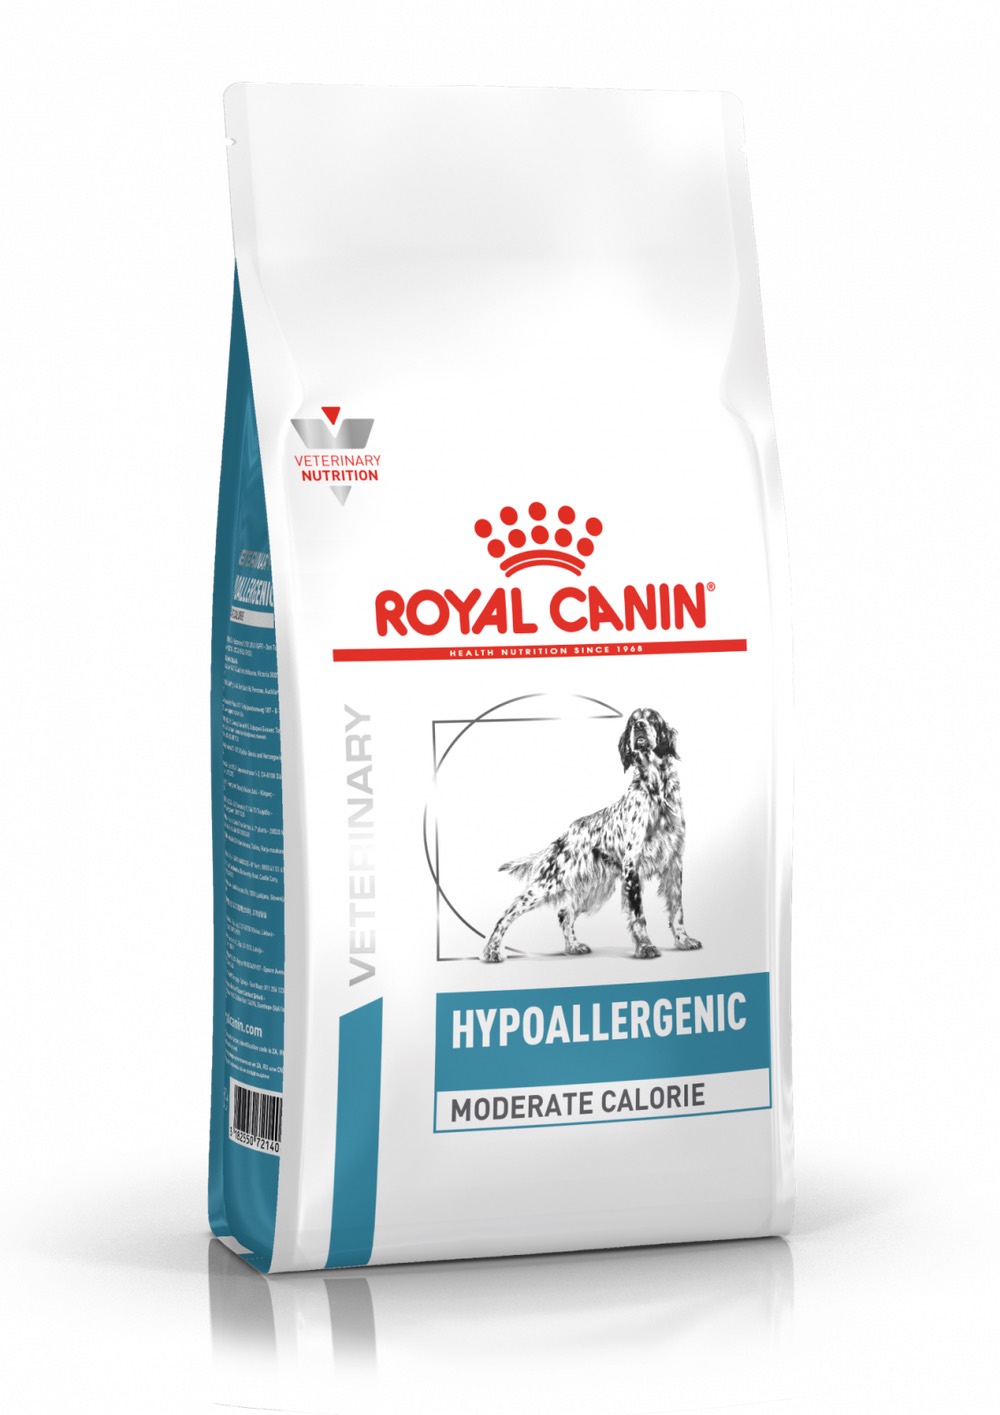 Royal Canin Hypollergenic Moderate Calorie™ - honden met allergie / Direct-Dierenarts